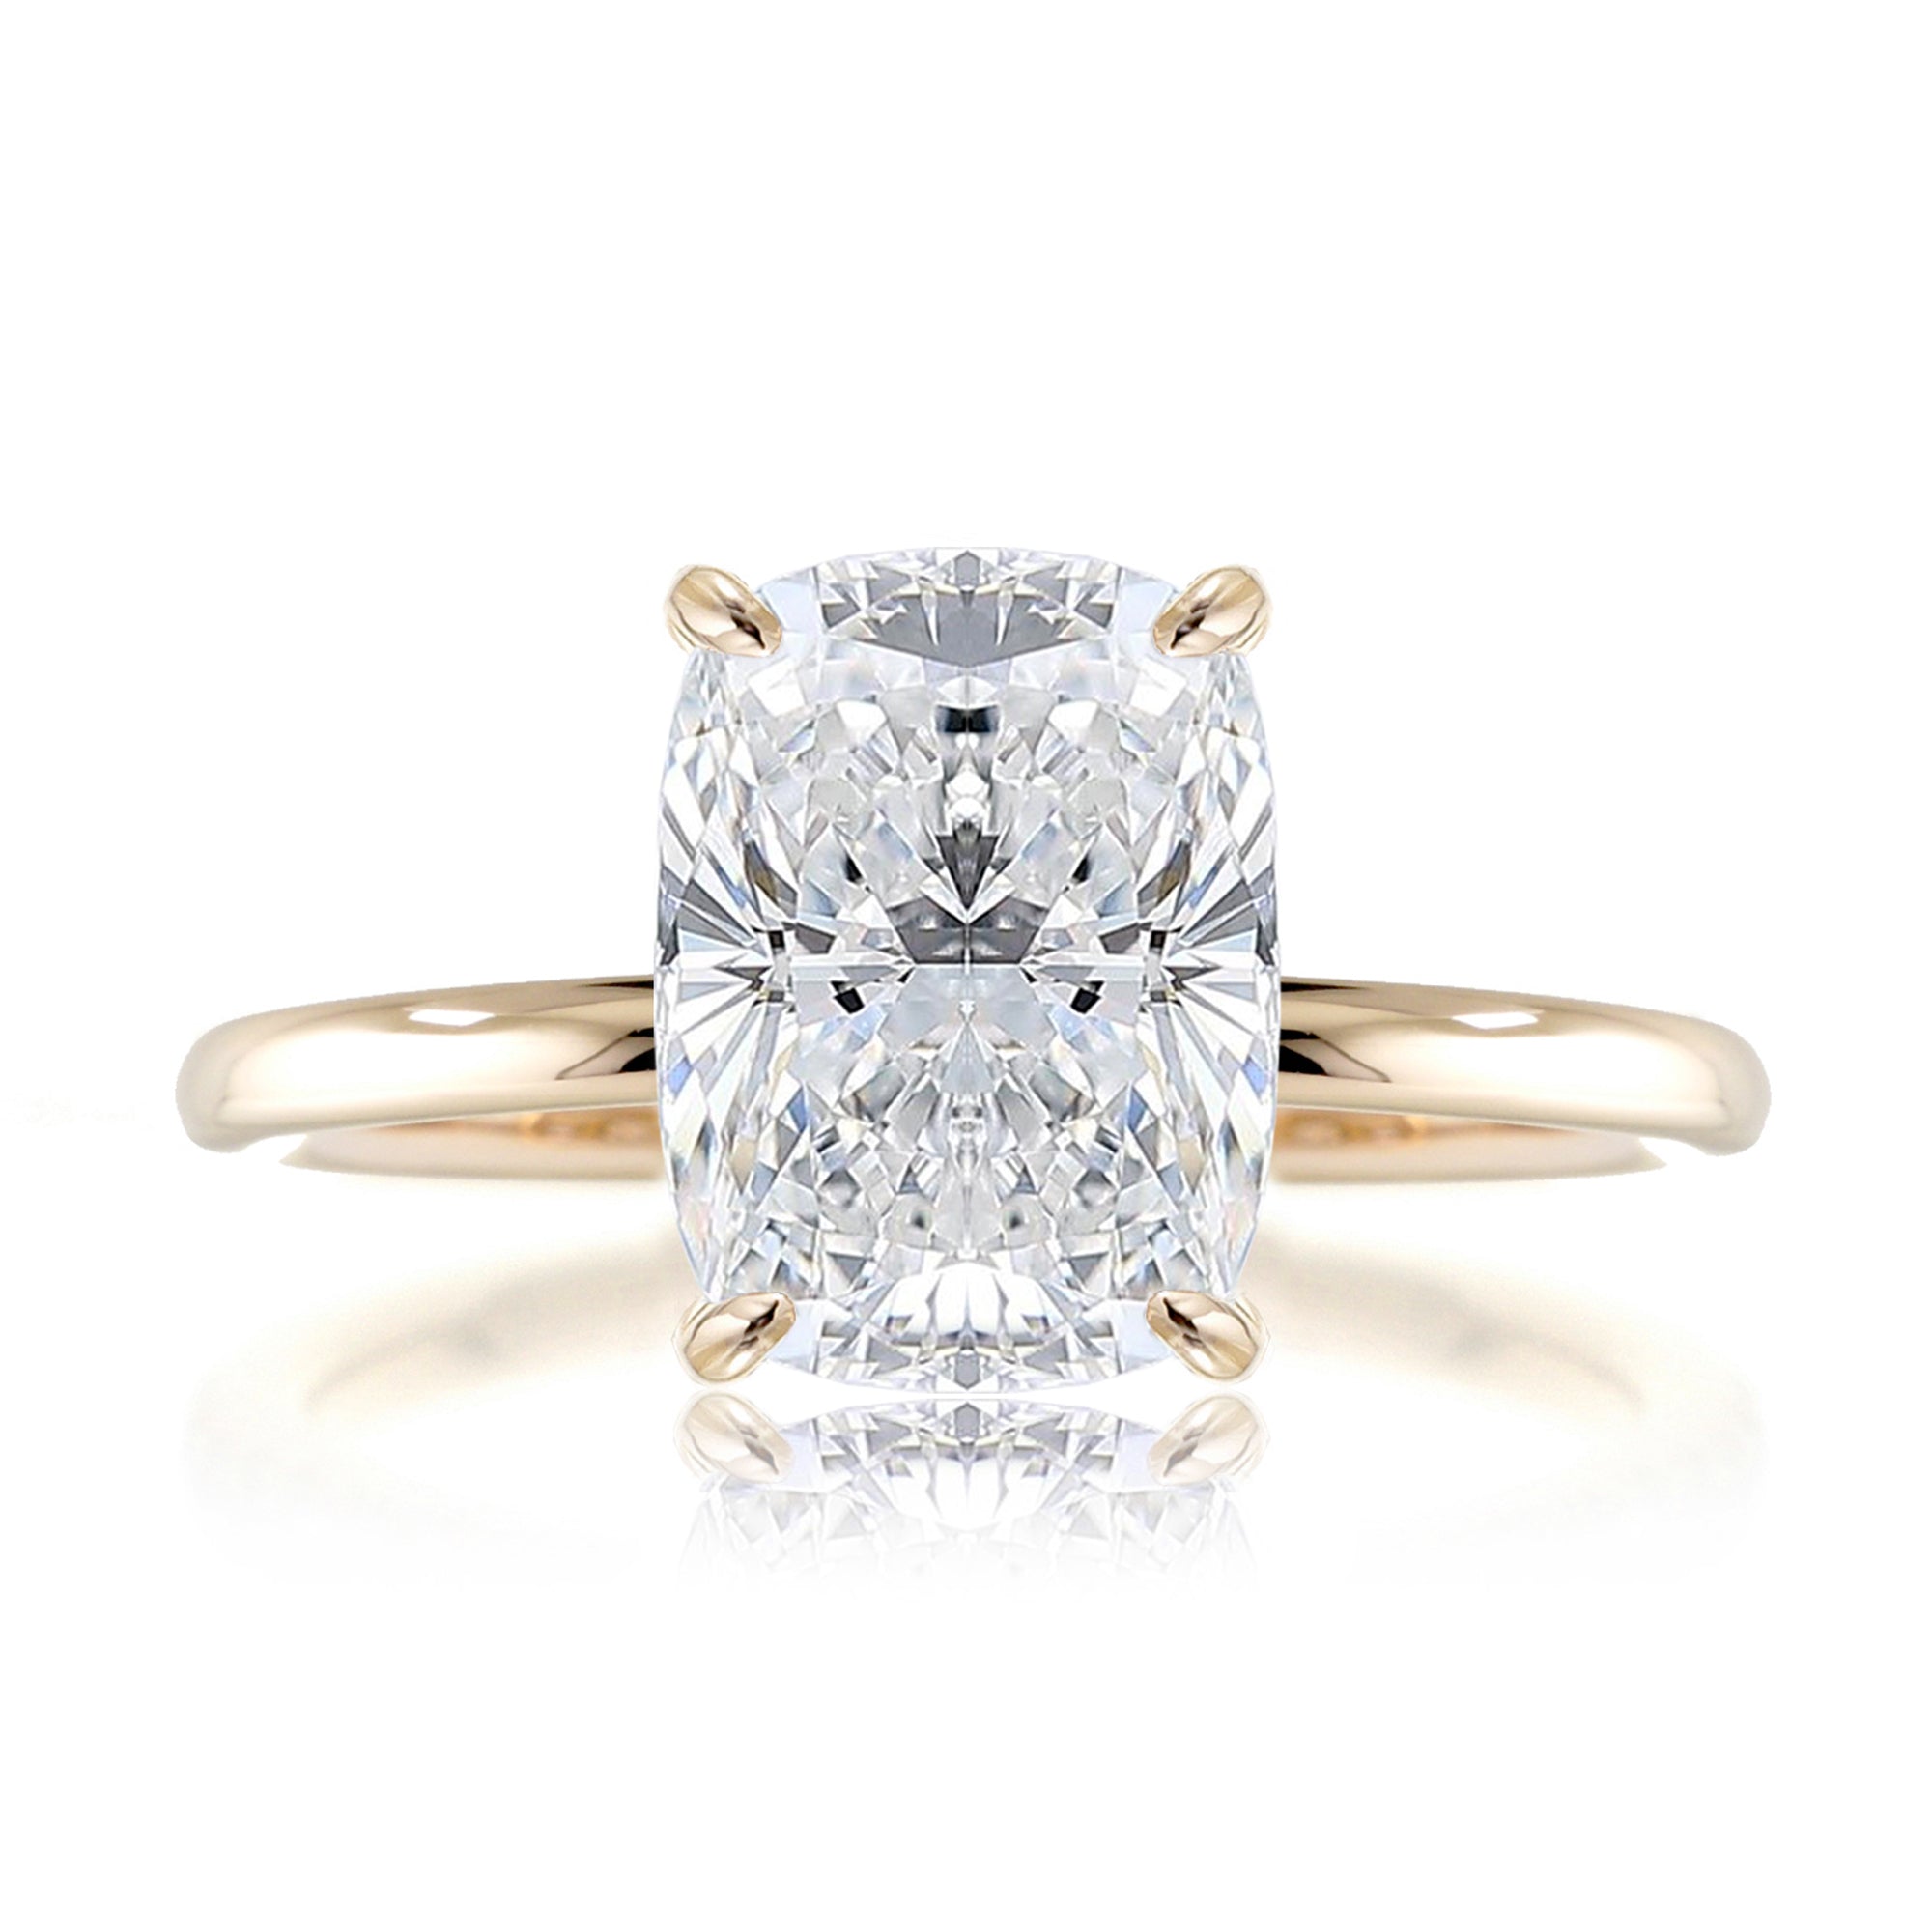 Cushion cut lab-grown diamond engagement ring yellow gold - The Ava